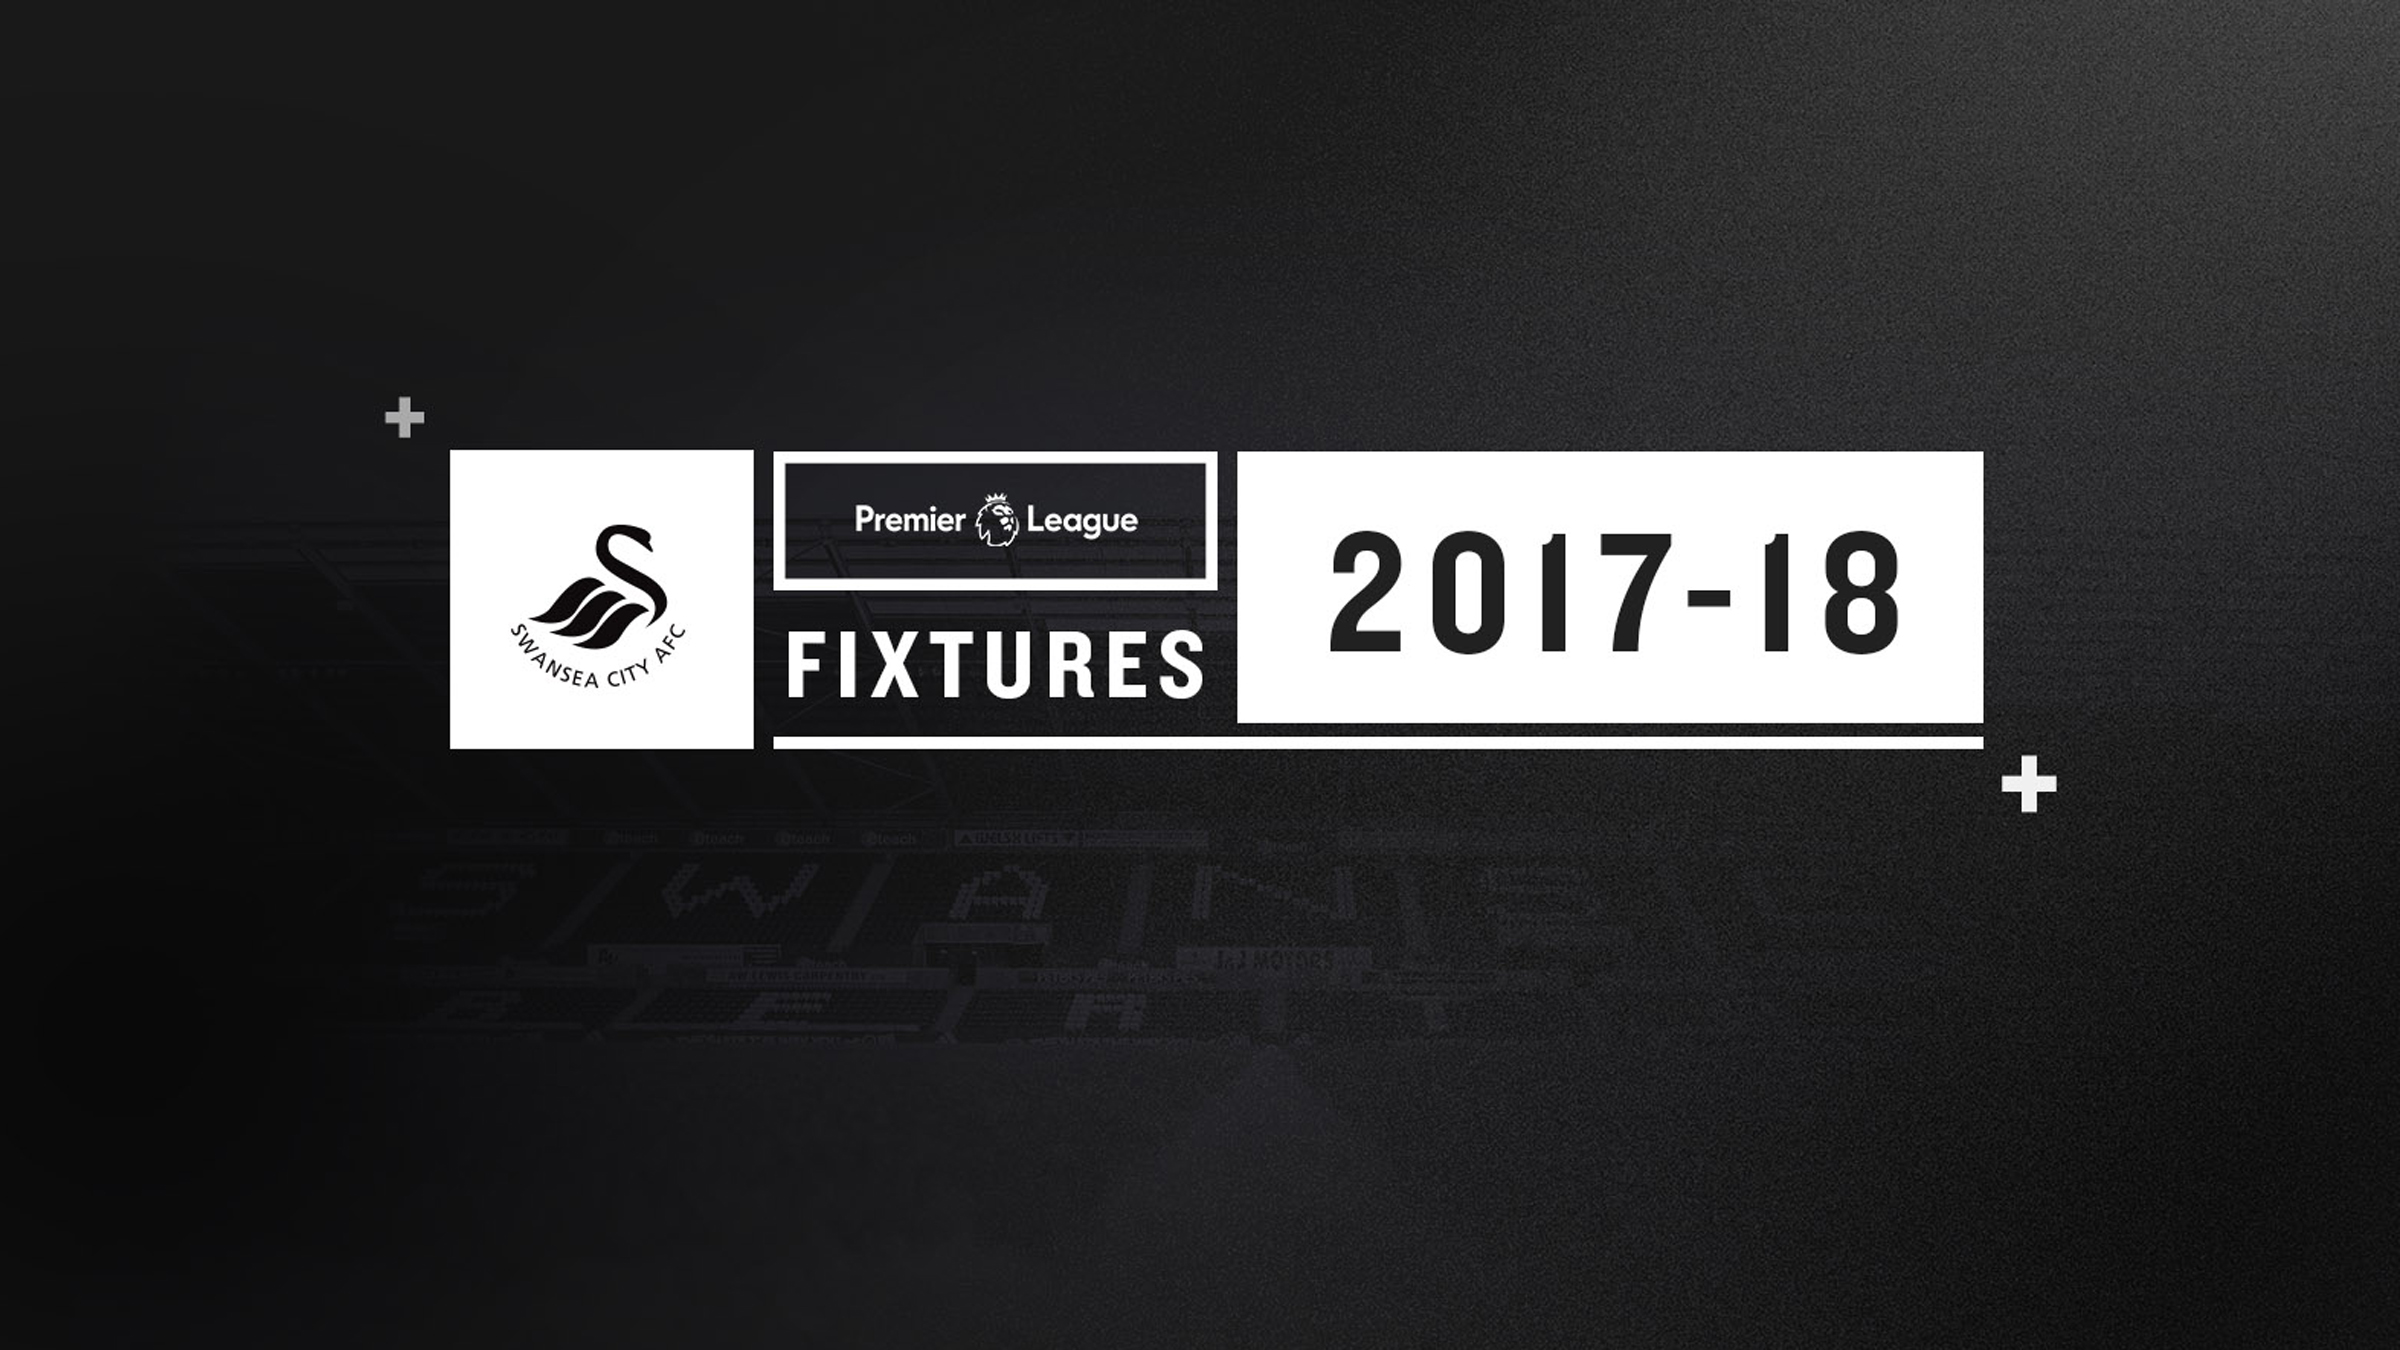 Swansea City Fixtures For The 2017 18 Premier League Season Swansea